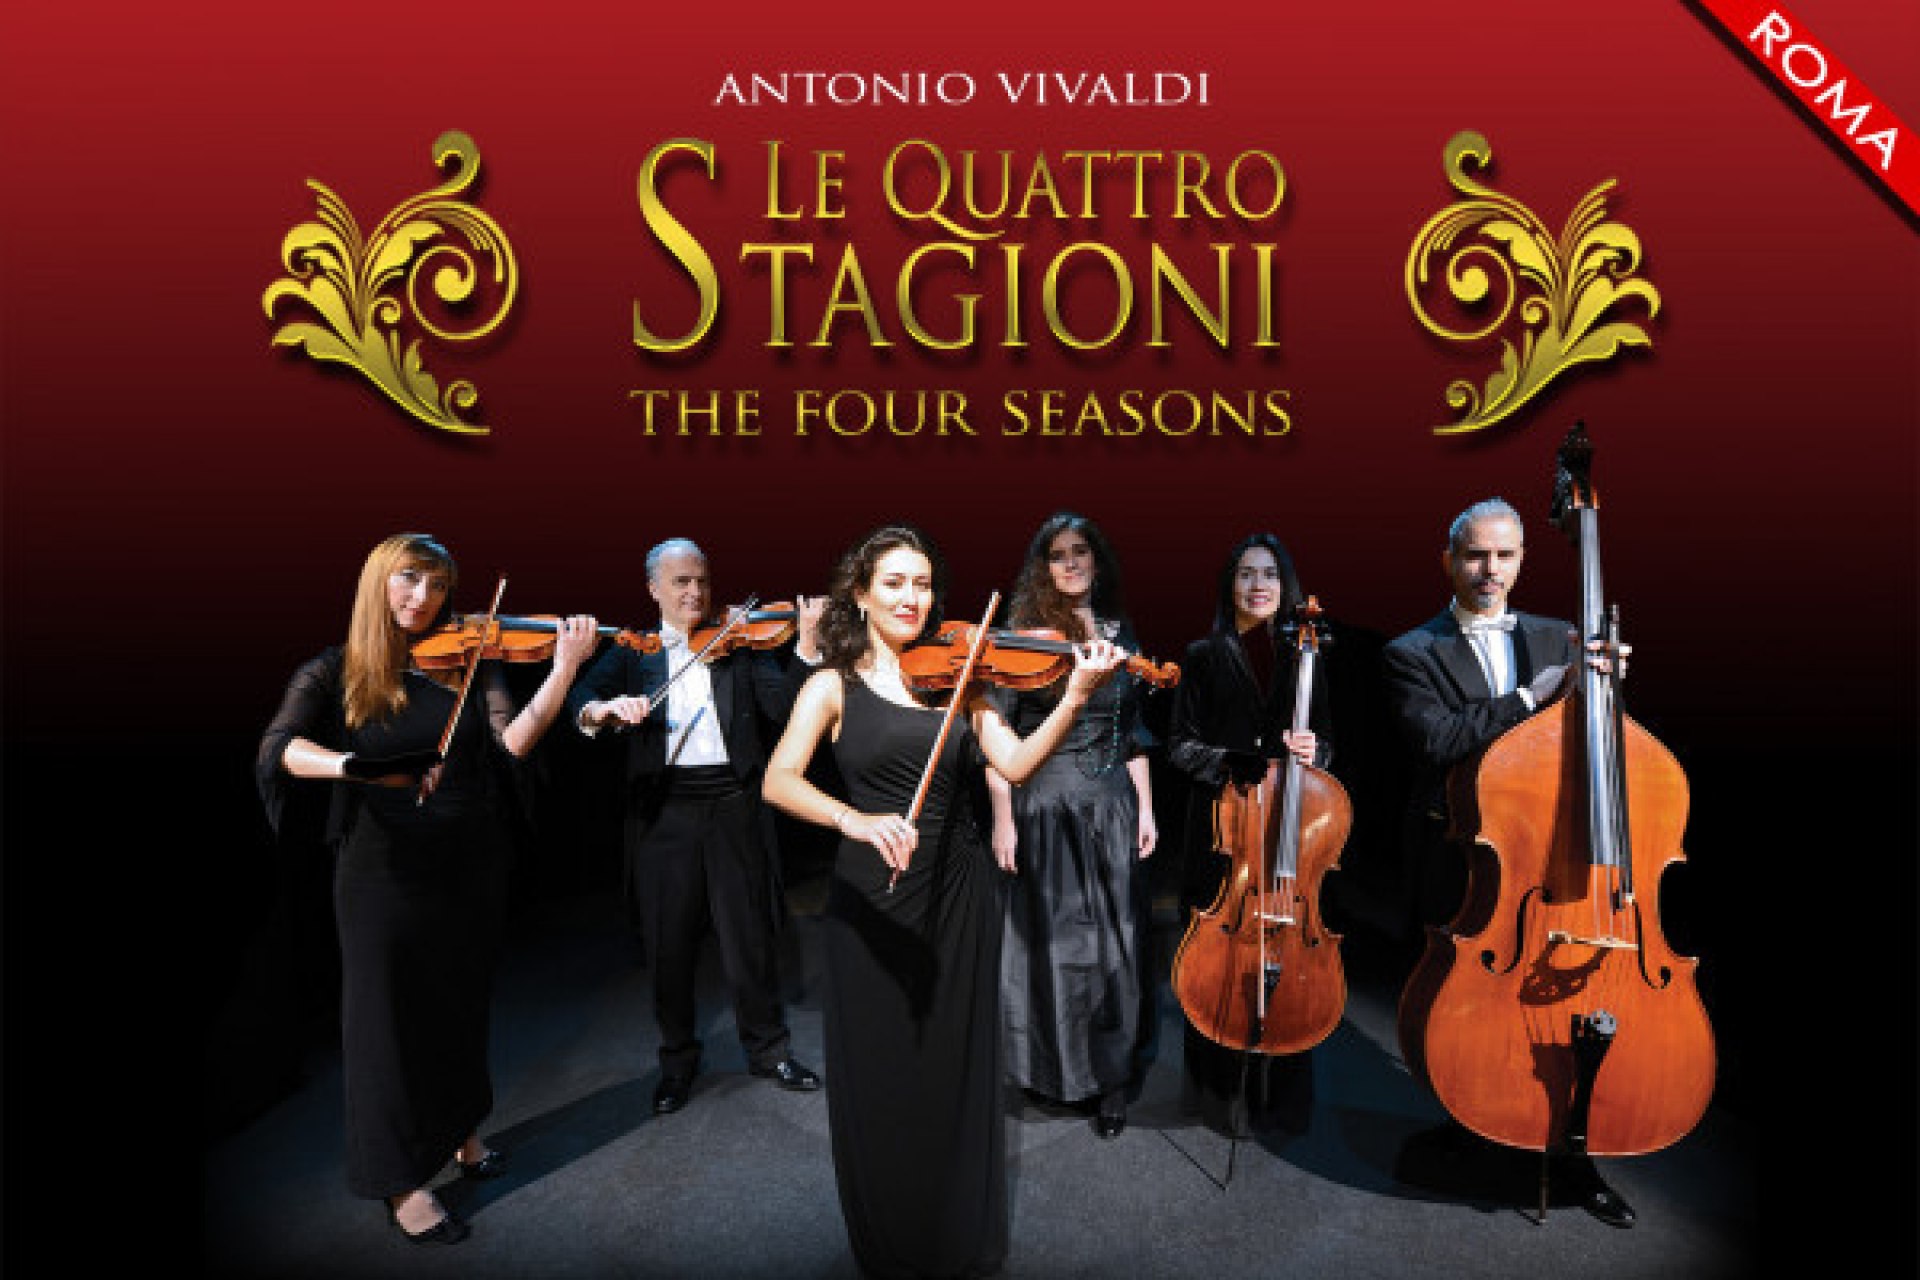 Antonio Vivaldi The Four Seasons in Rome